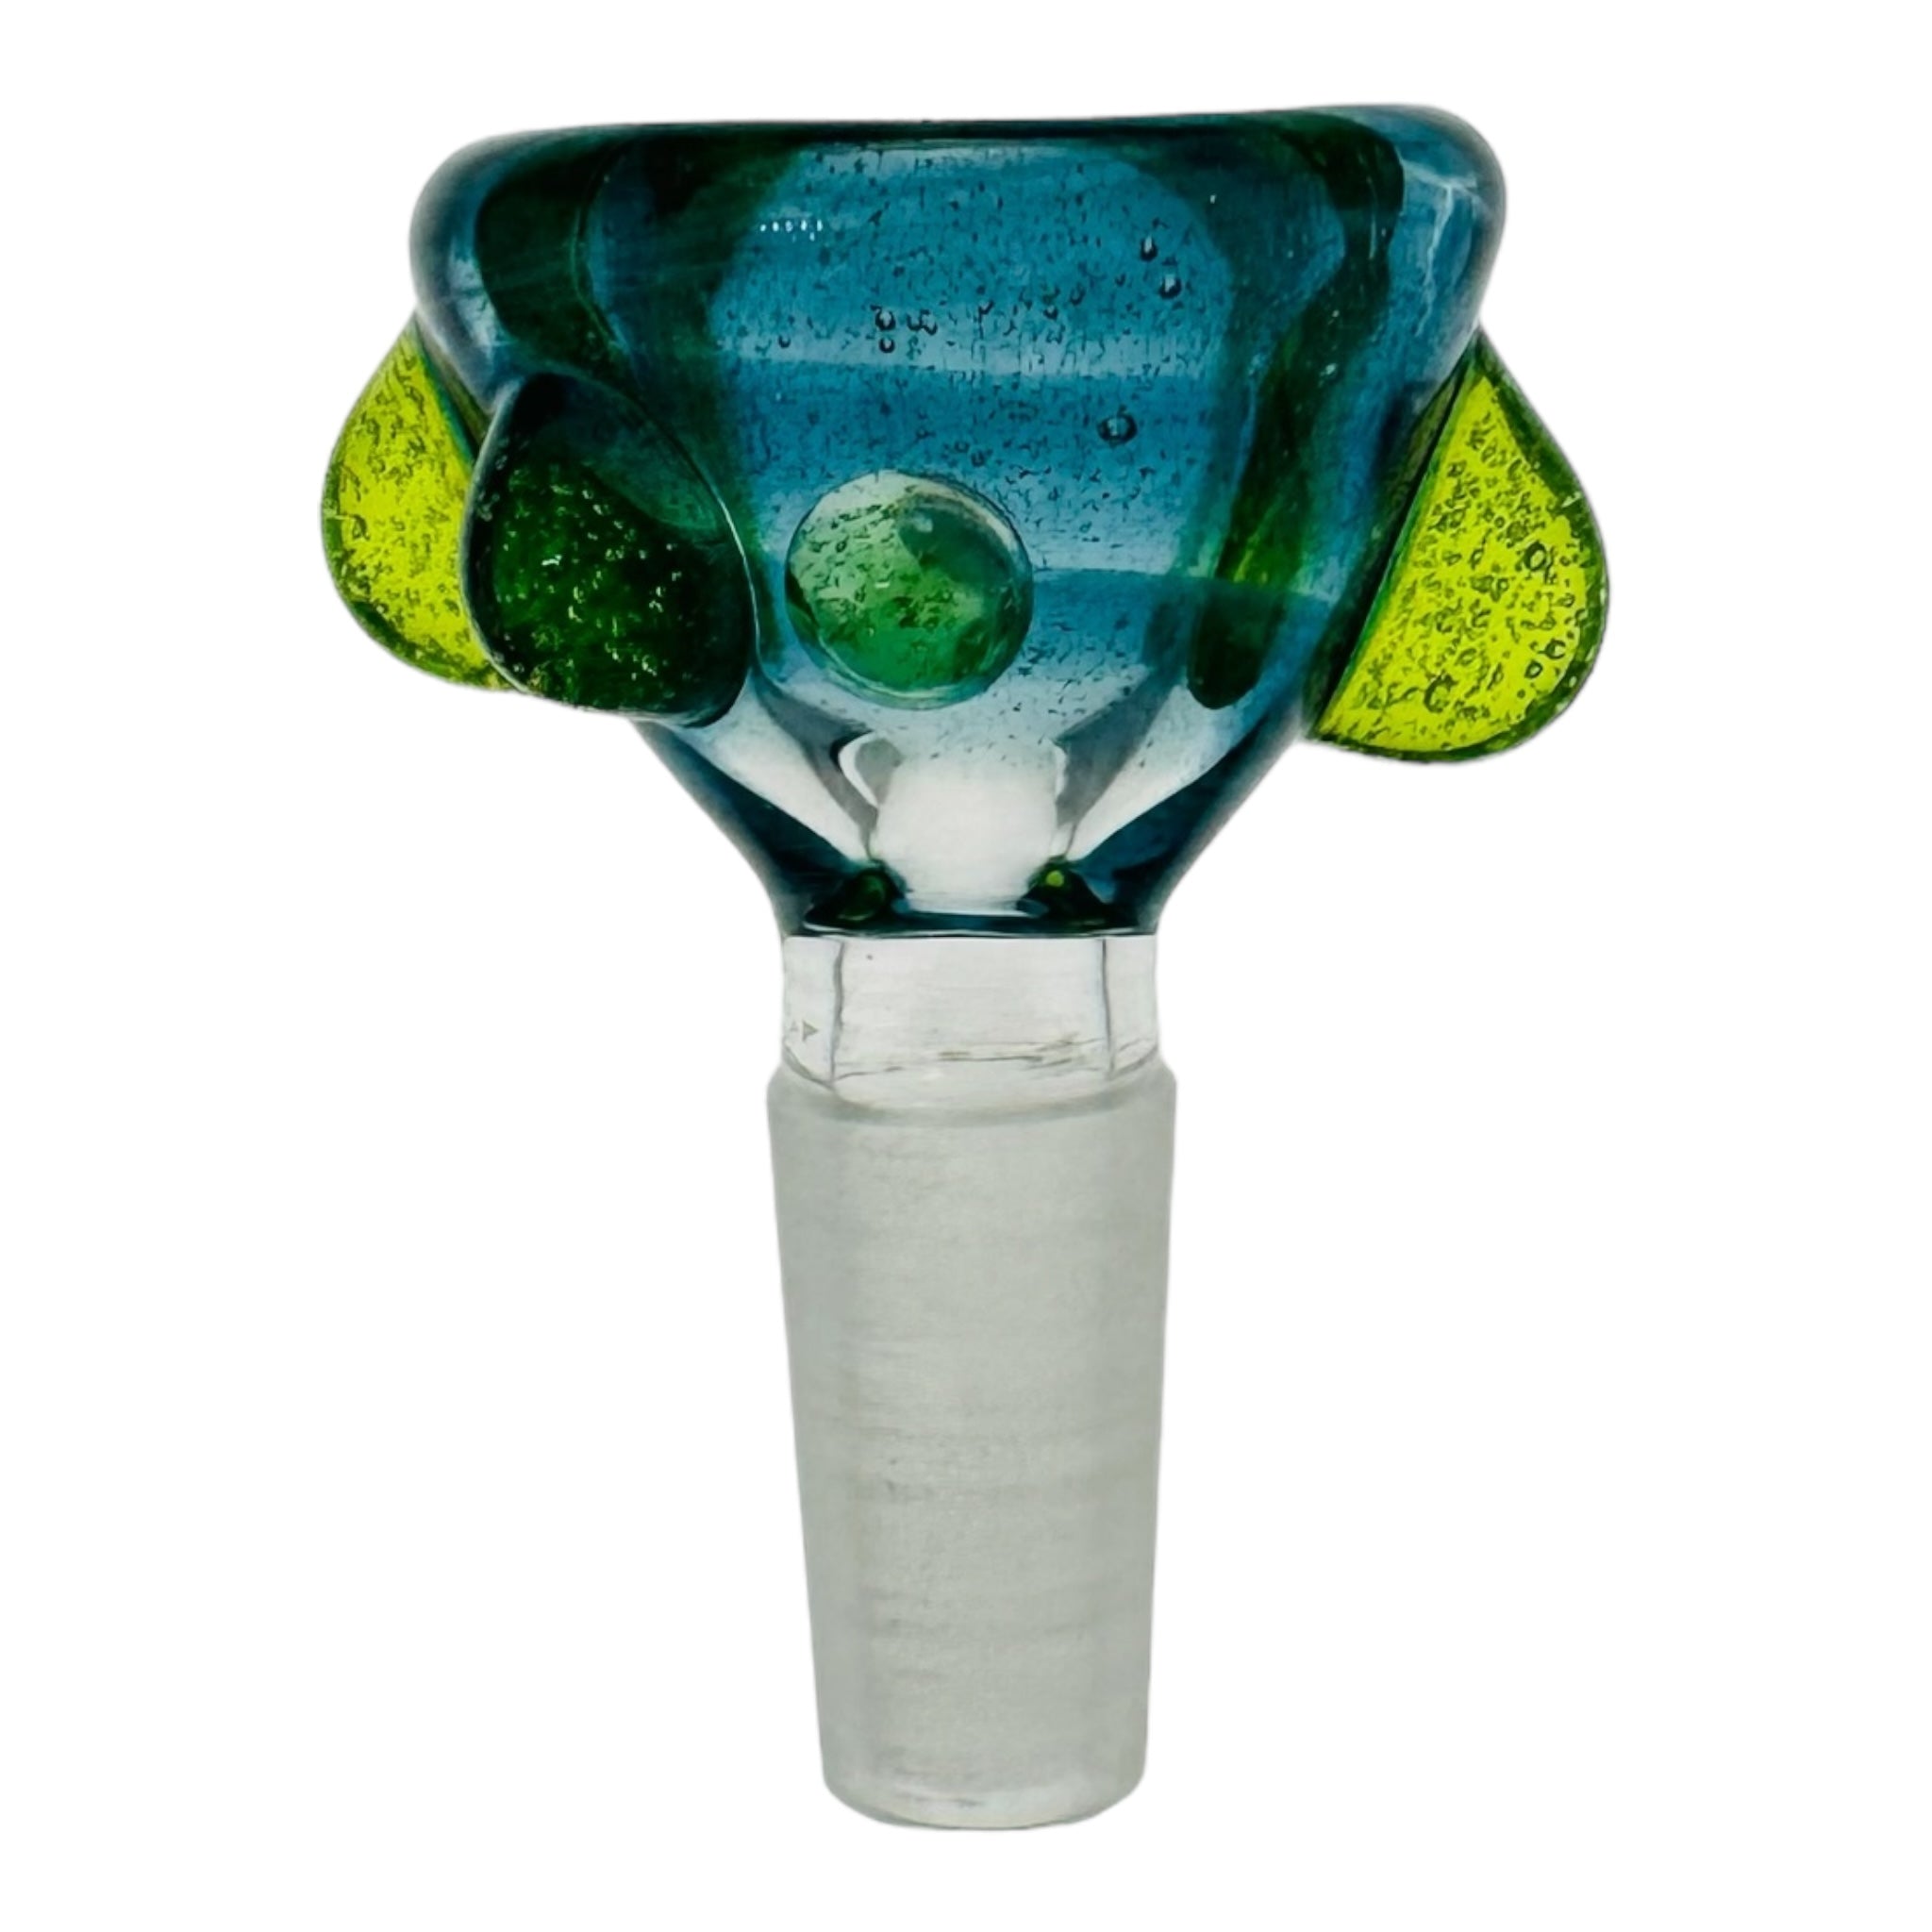 Arko Glass 10mm Flower Bowl Blue Dream Bowl With Hatorade Green Dots